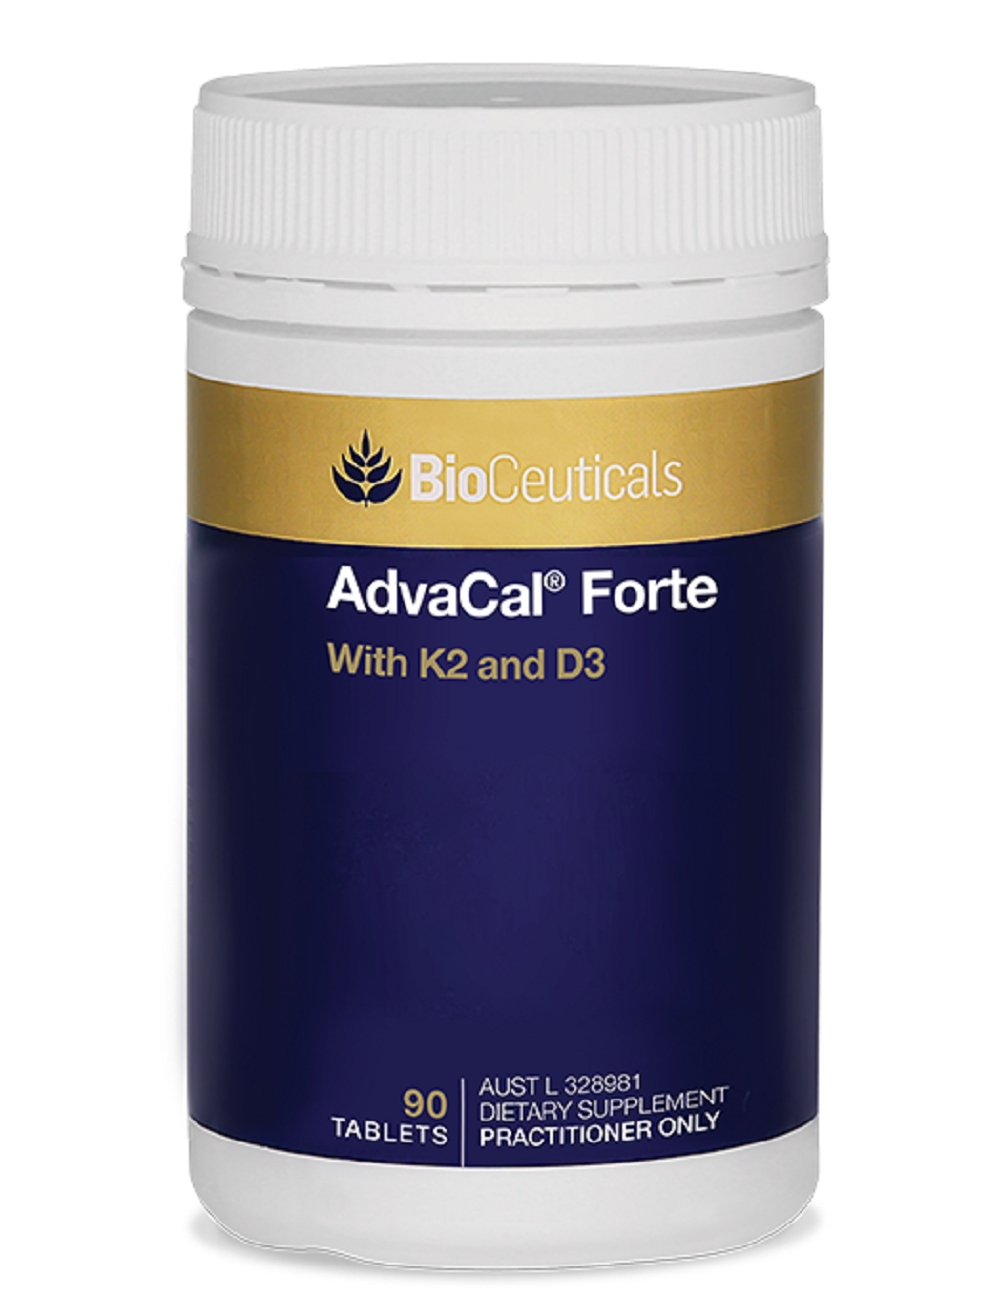 BioCeuticals AdvaCal Forte 90 Tablets